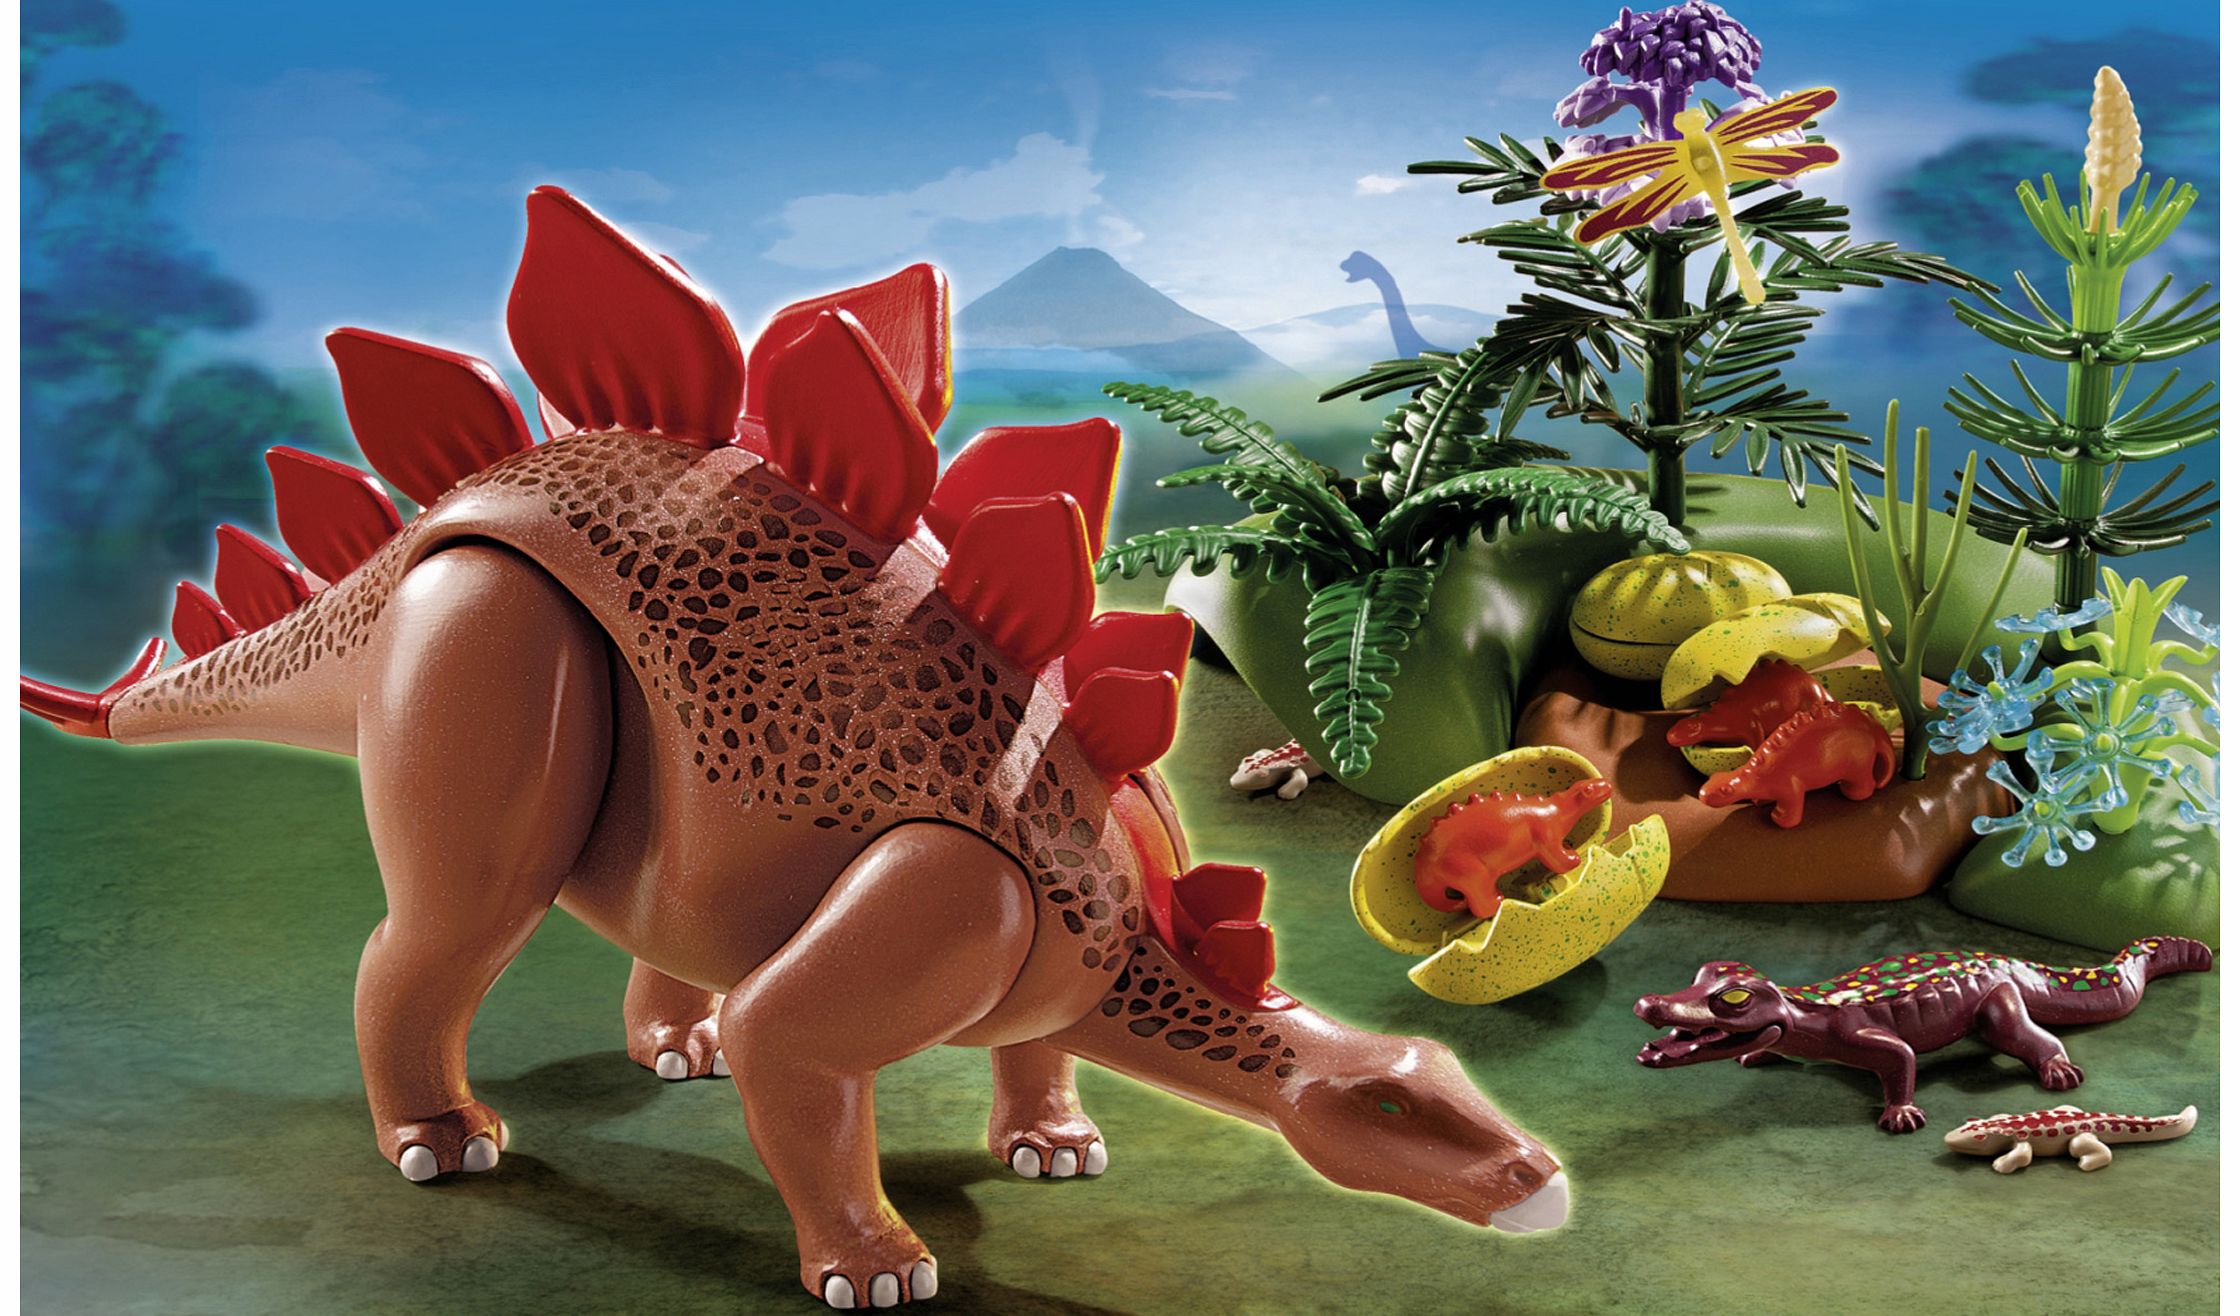 PLAYMOBIL Stegosaurus 5232